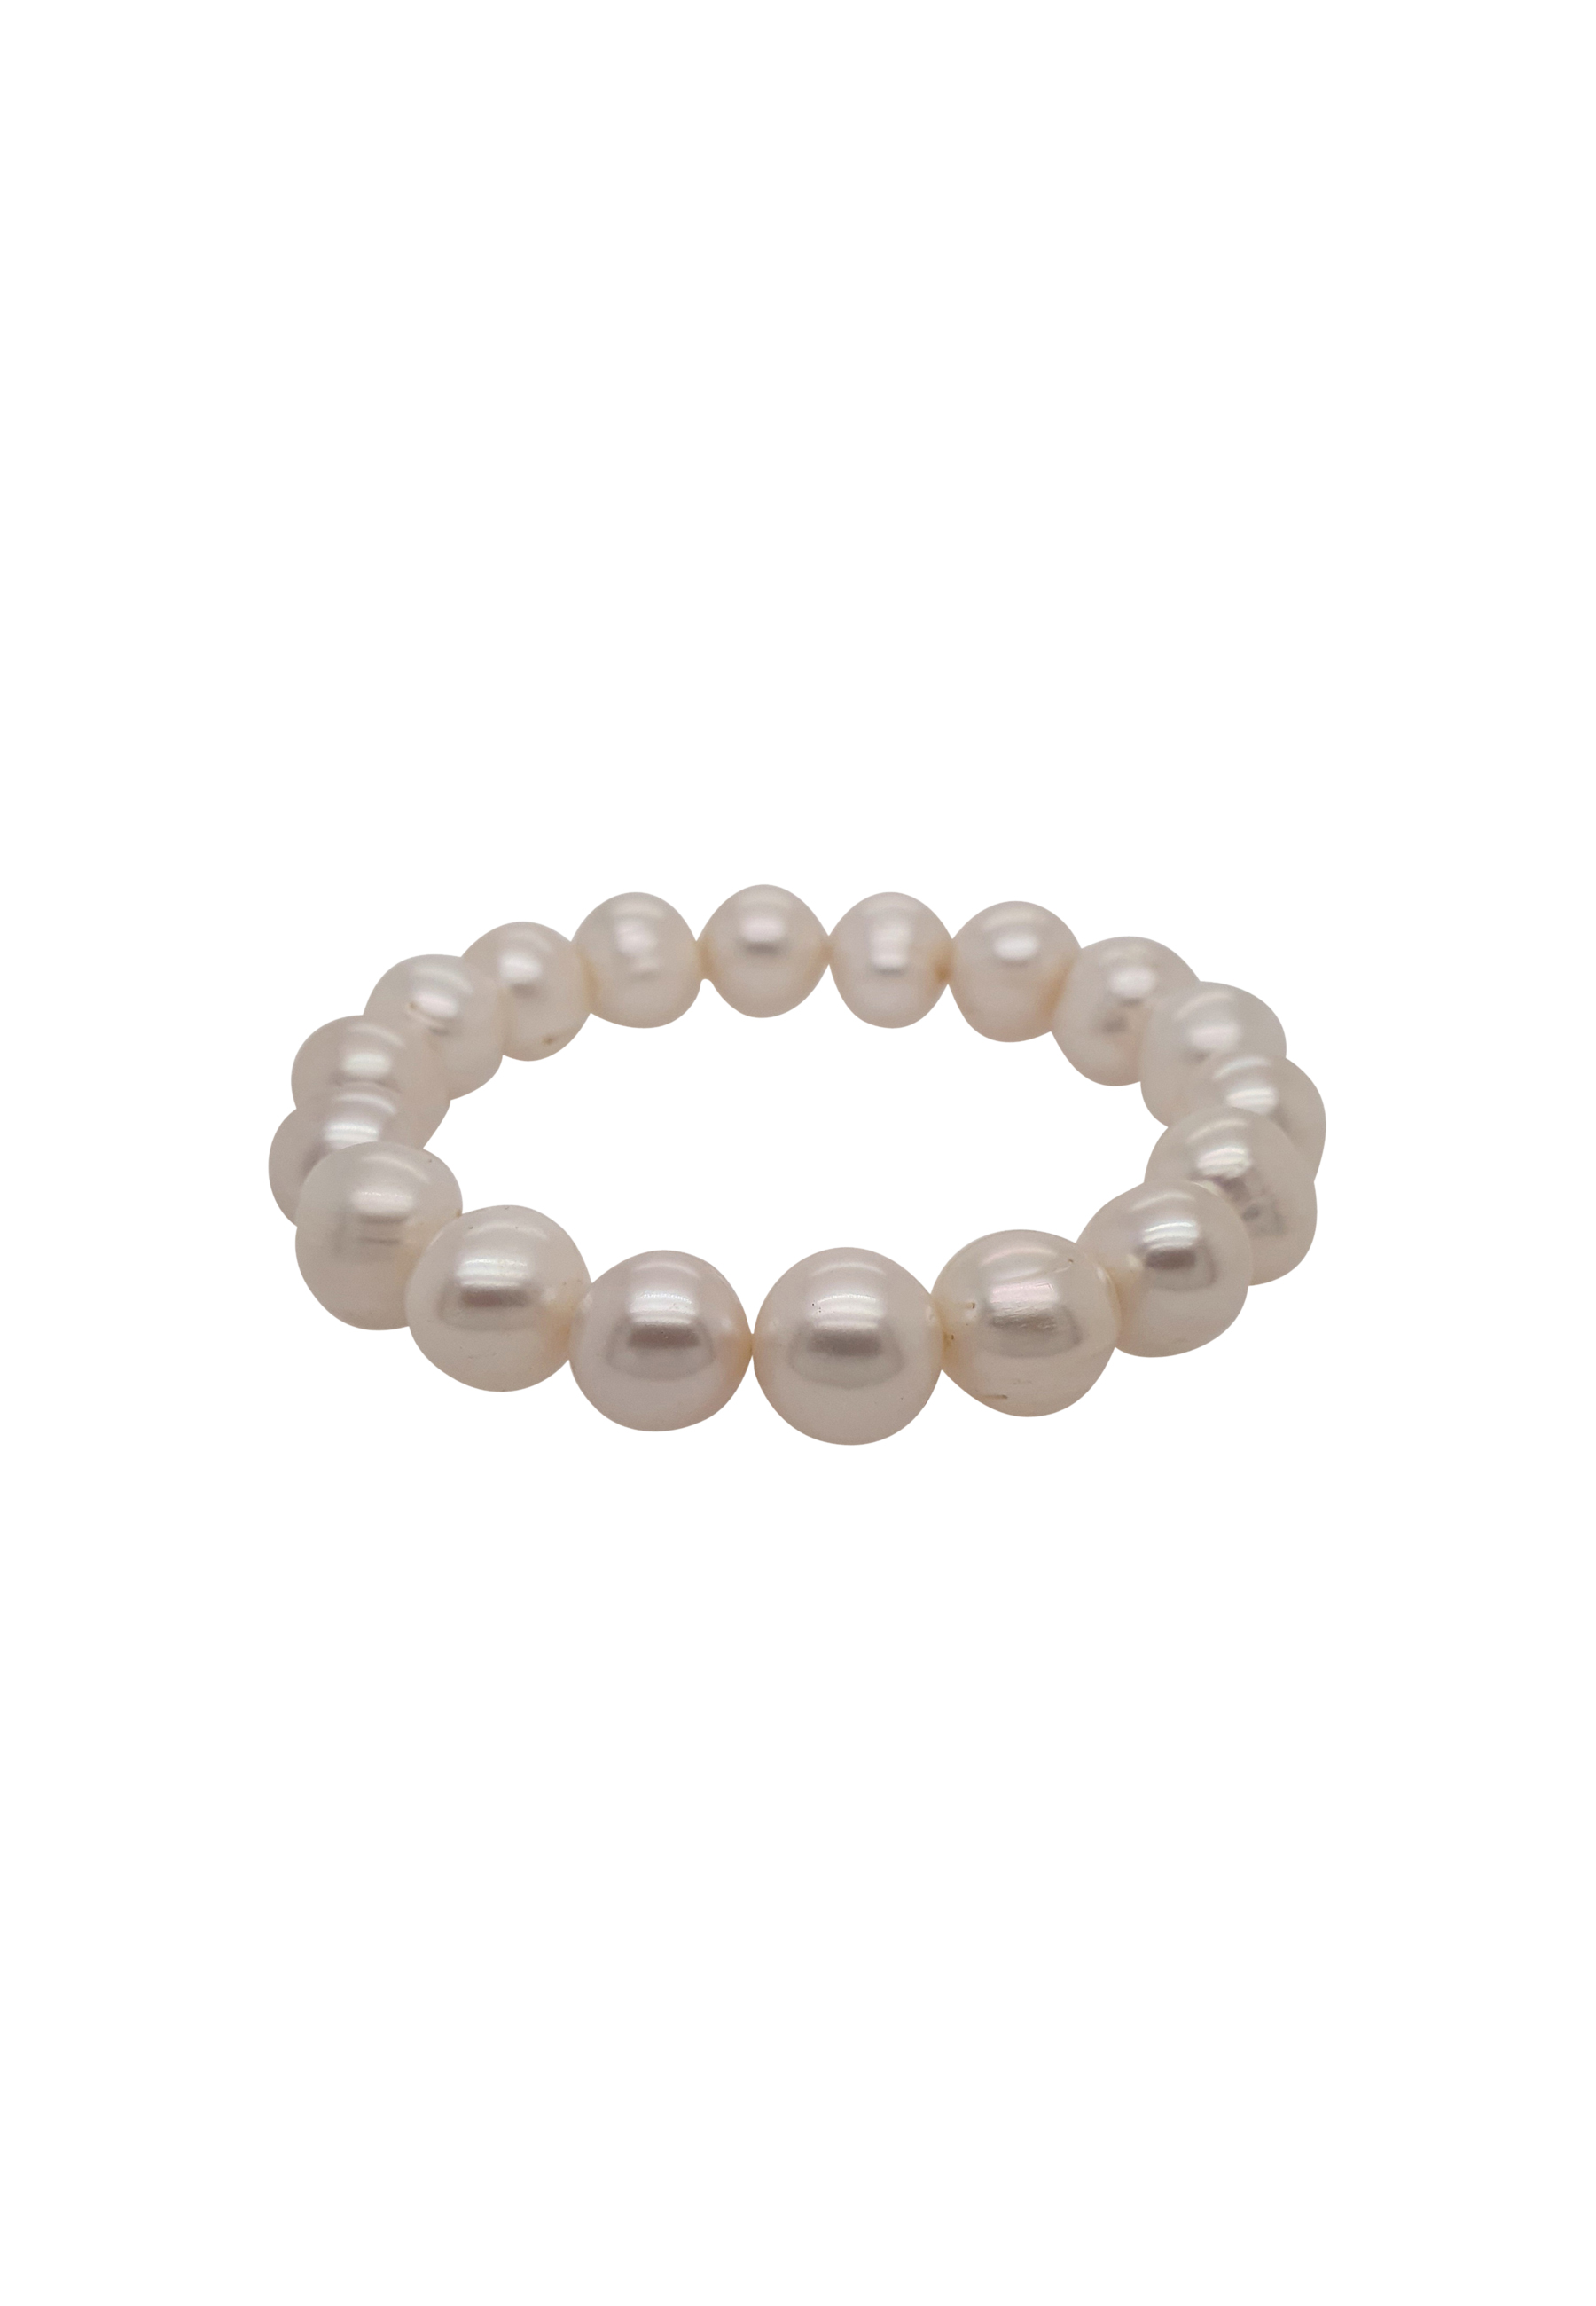  Perlenarmband 10-12 mm Perlen 